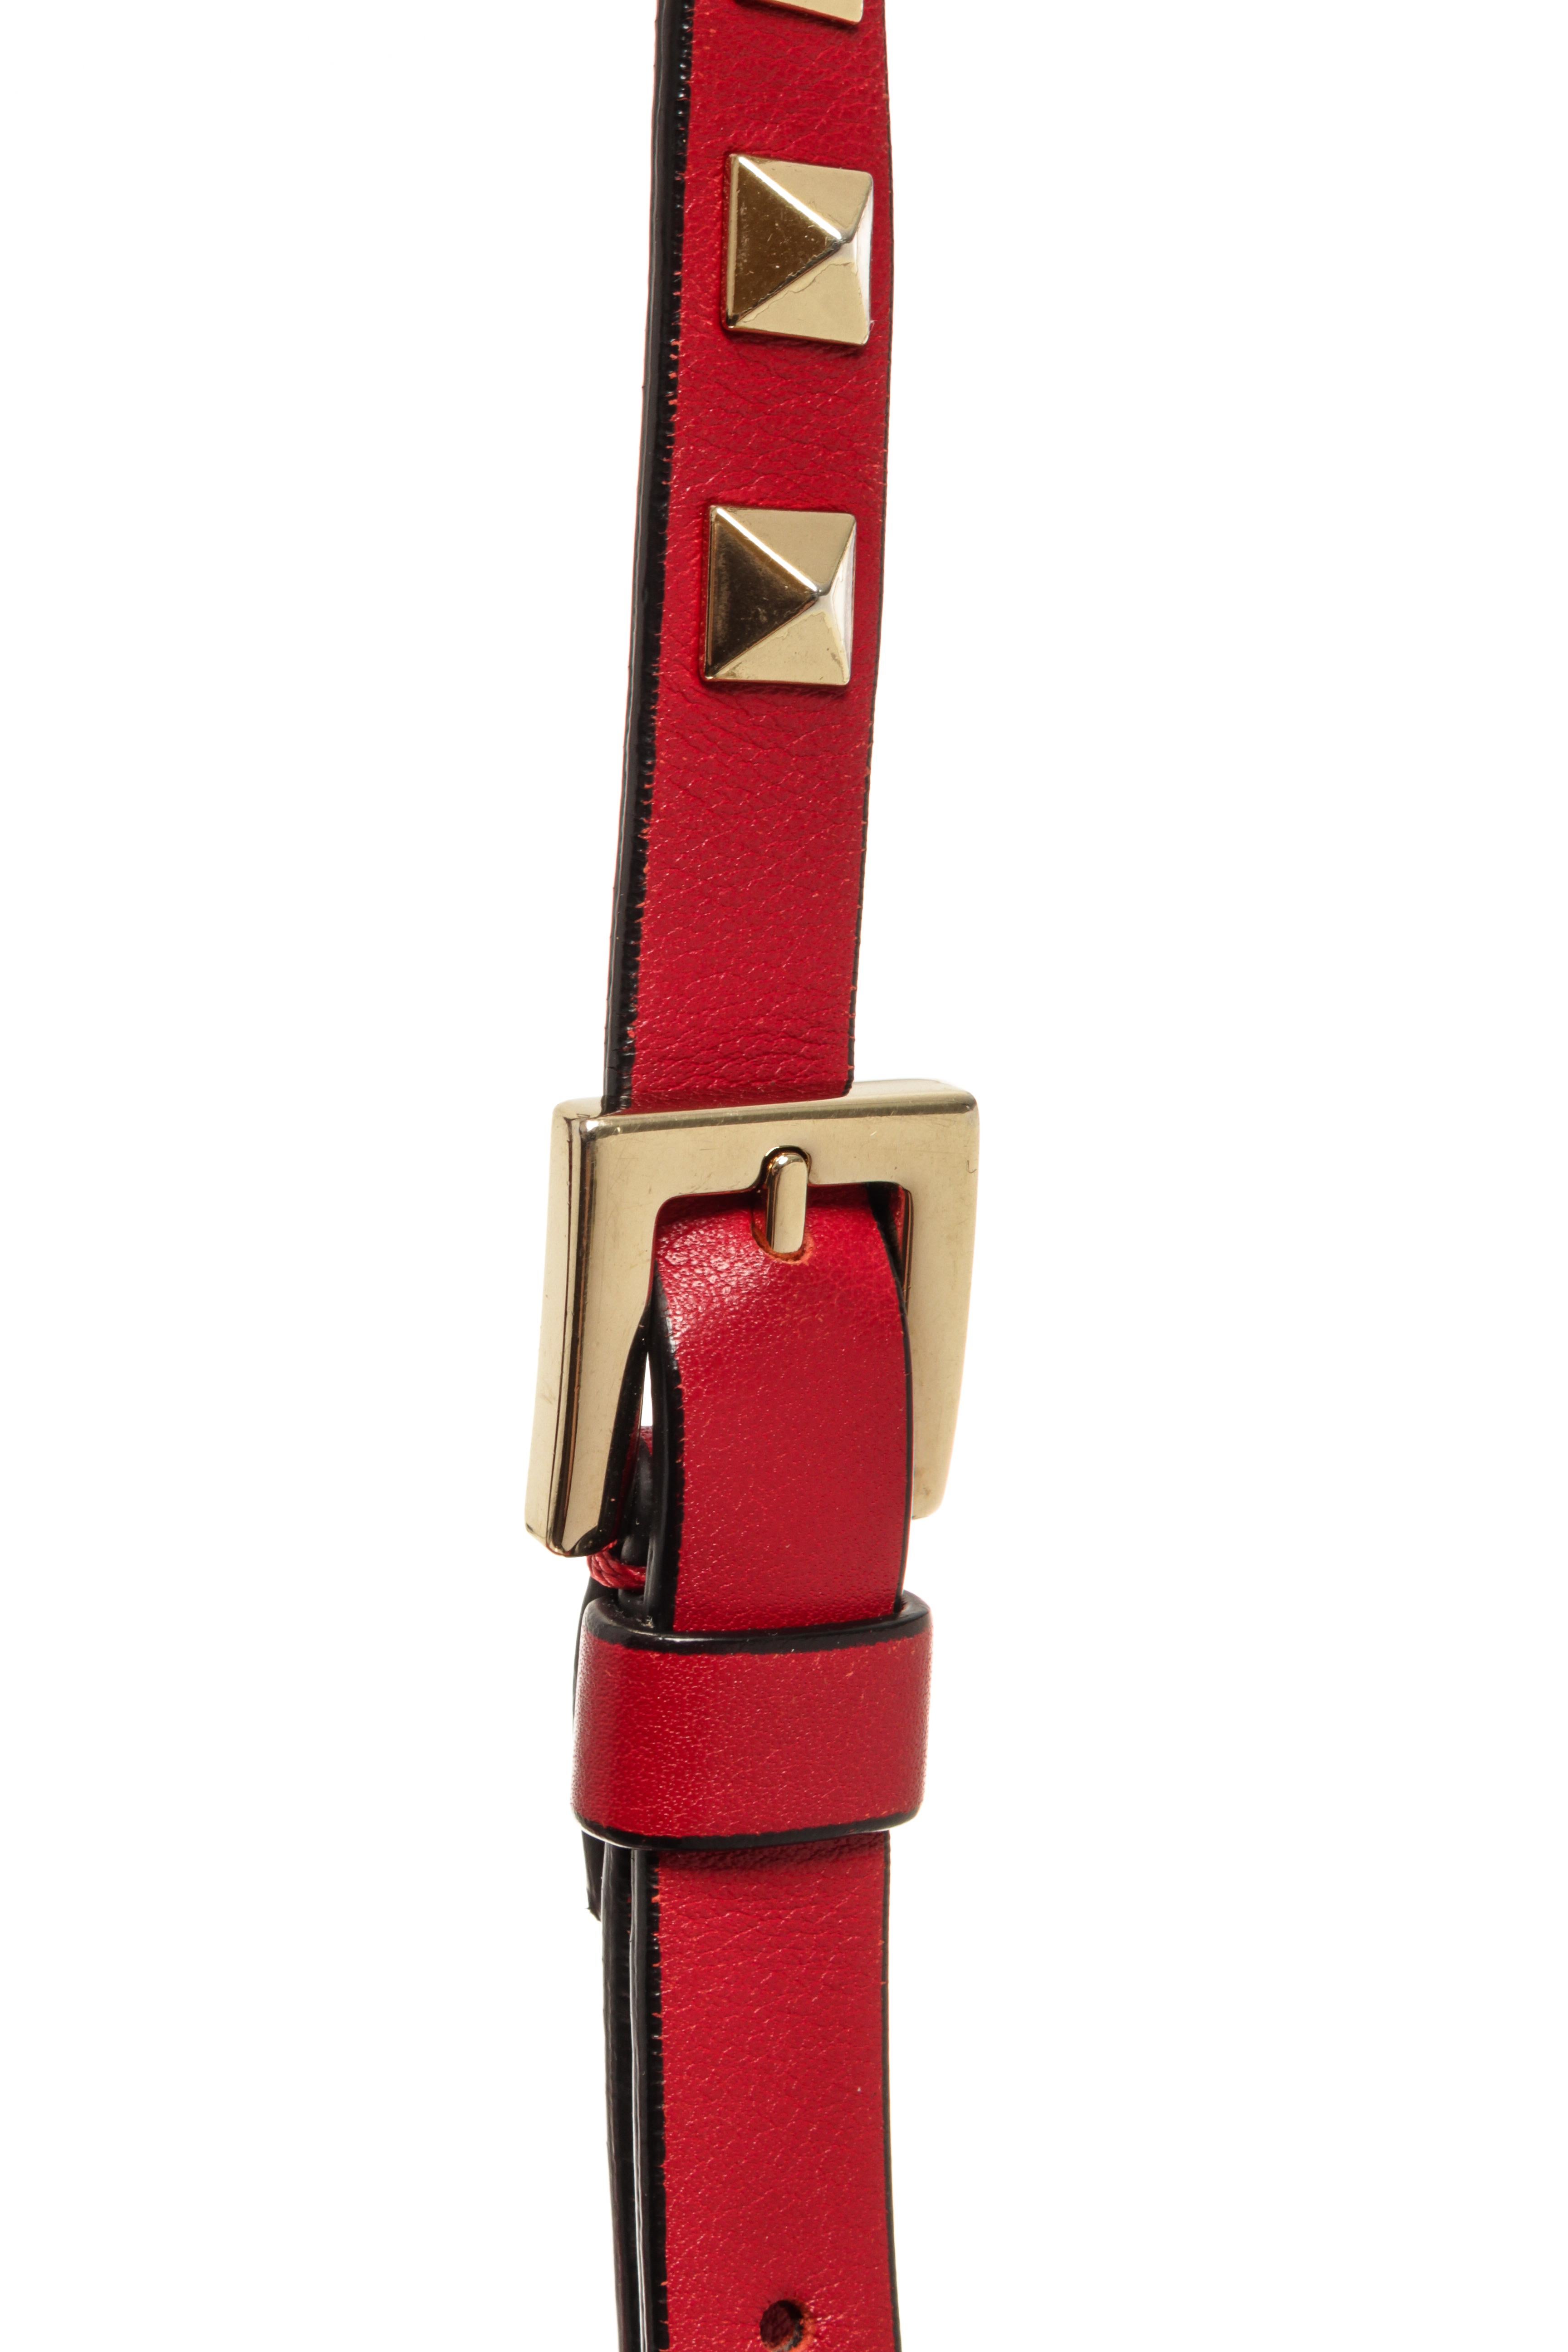 Valentino Tricolor Leather Rockstud Flip Lock Flap Mini Bag For Sale 3